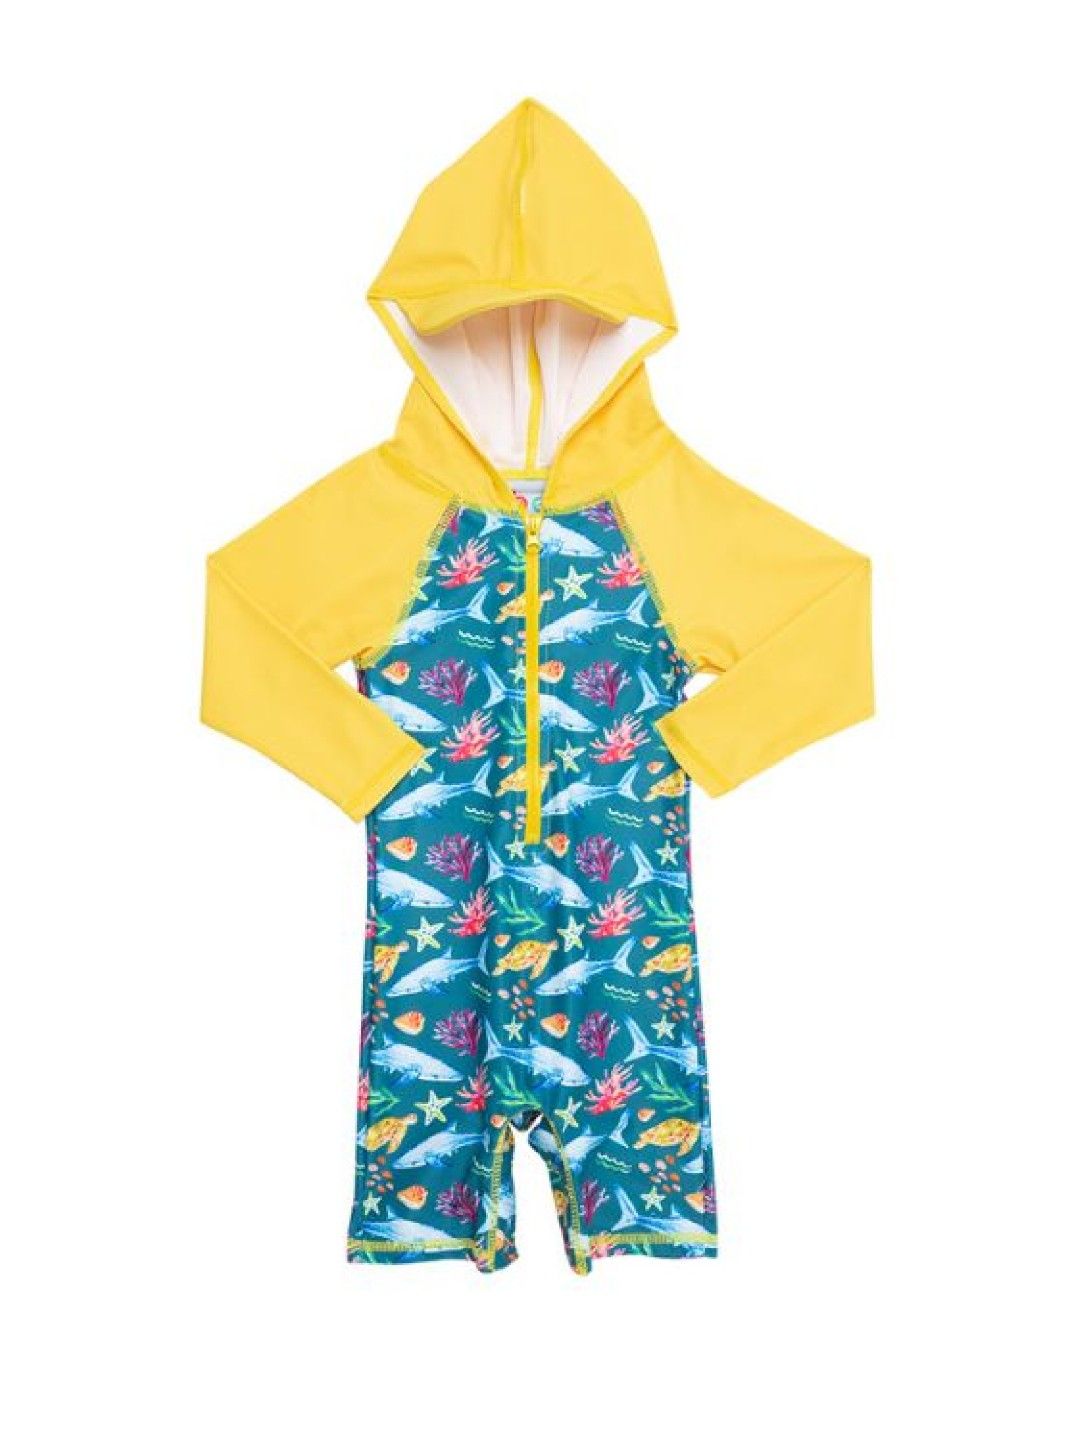 bean fashion Anina Rubio Panglao Baby Boy Hooded Swimsuit (Multicolor- Image 2)